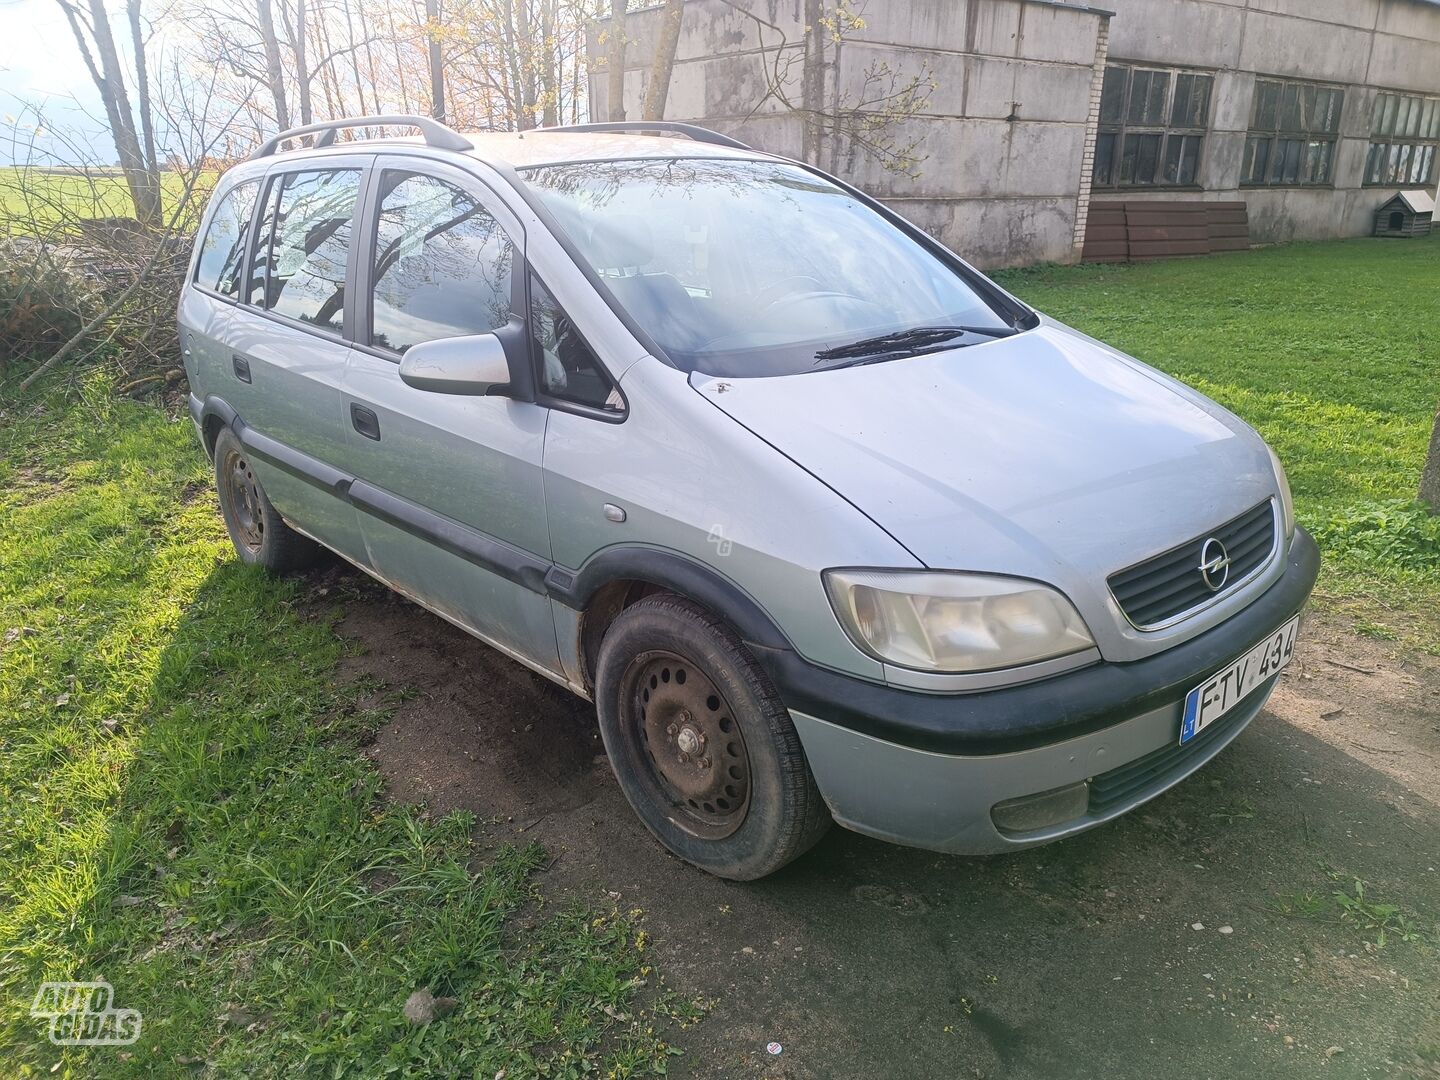 Opel Zafira 2001 y Van